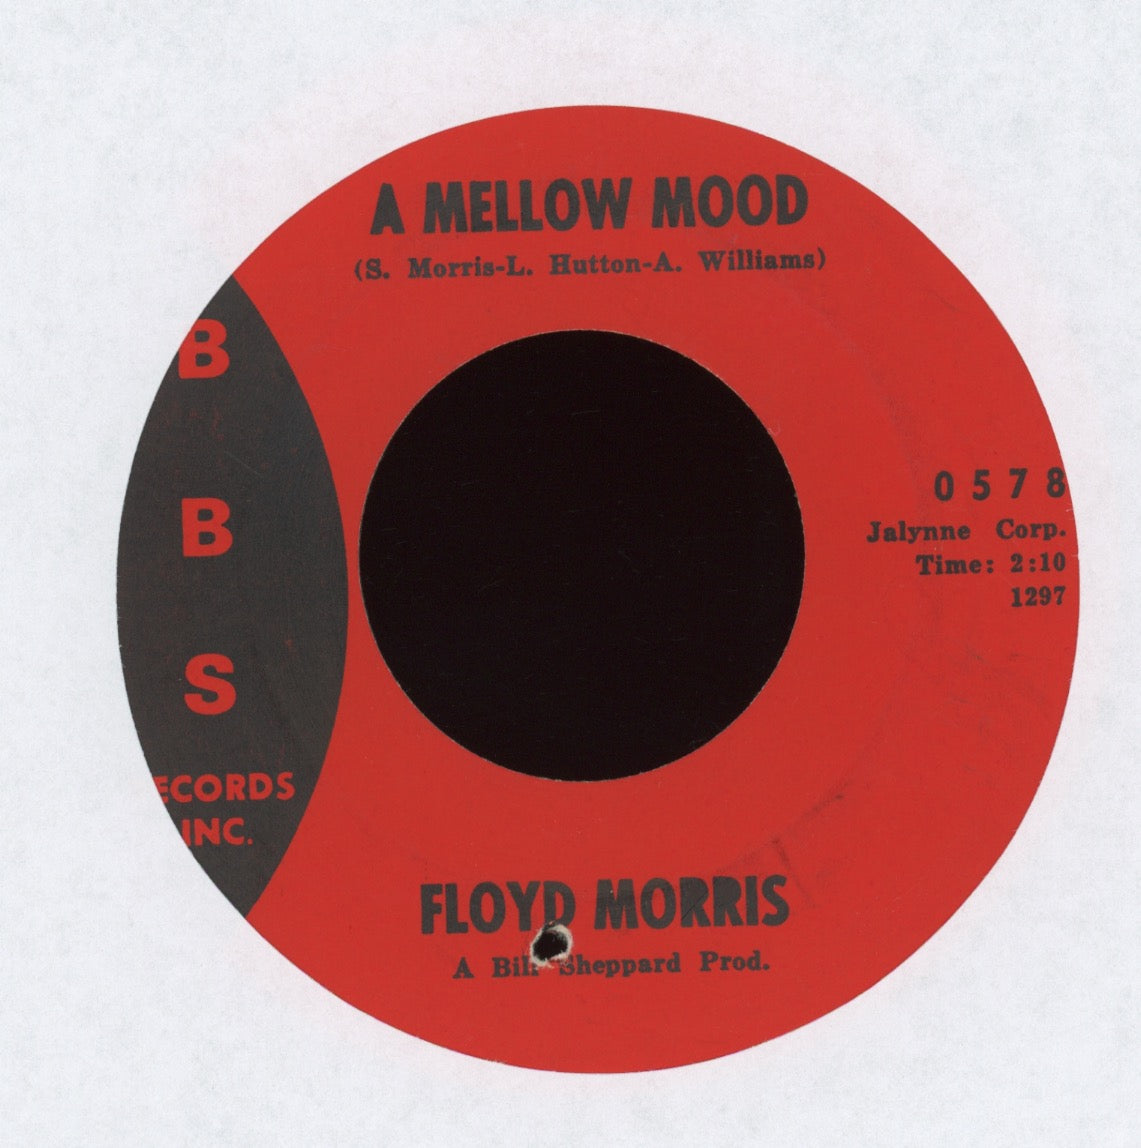 Floyd Morris - Bee Que on BBS